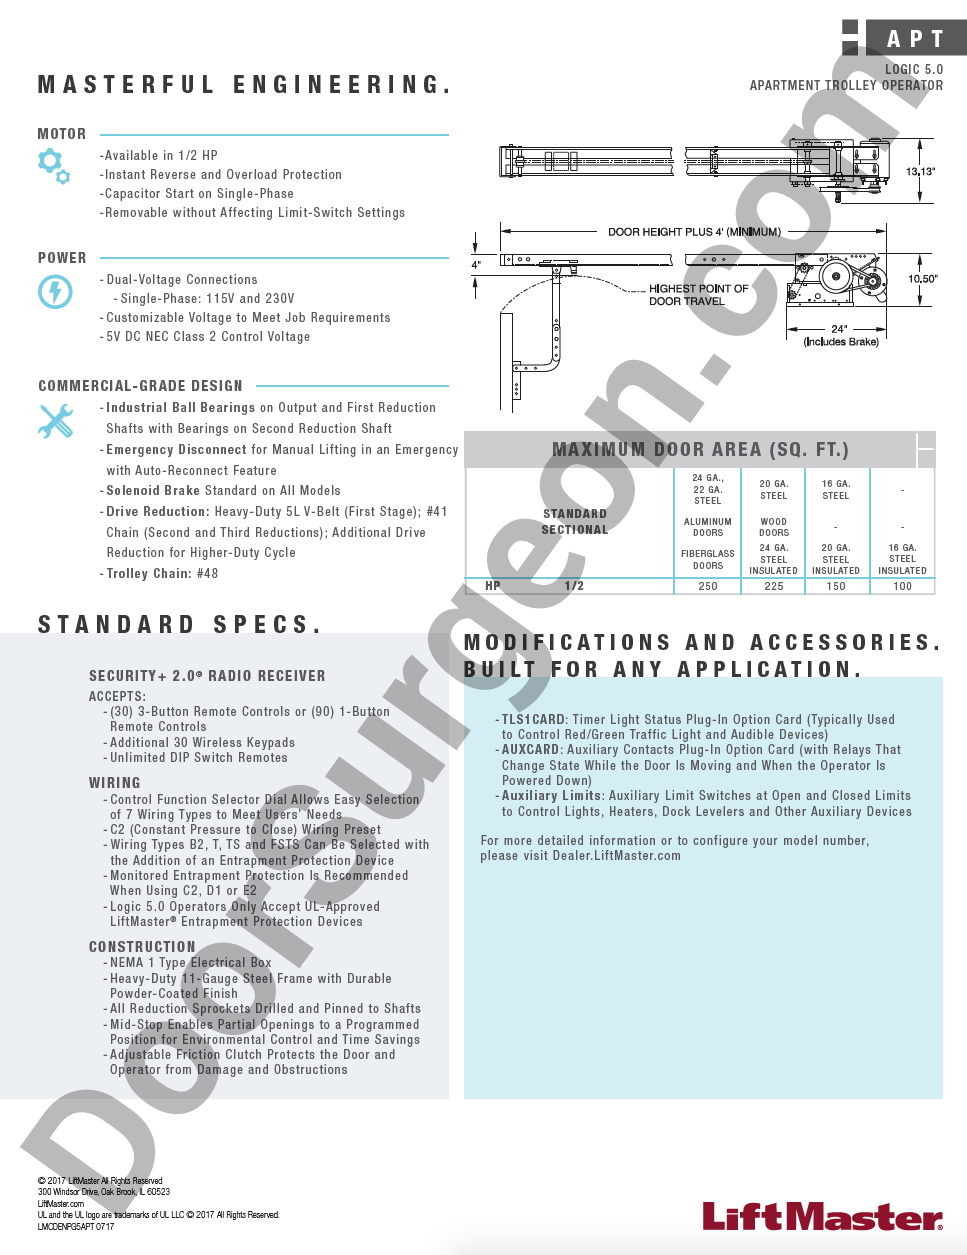 Liftmaster apartmenet trolley specification sheet.